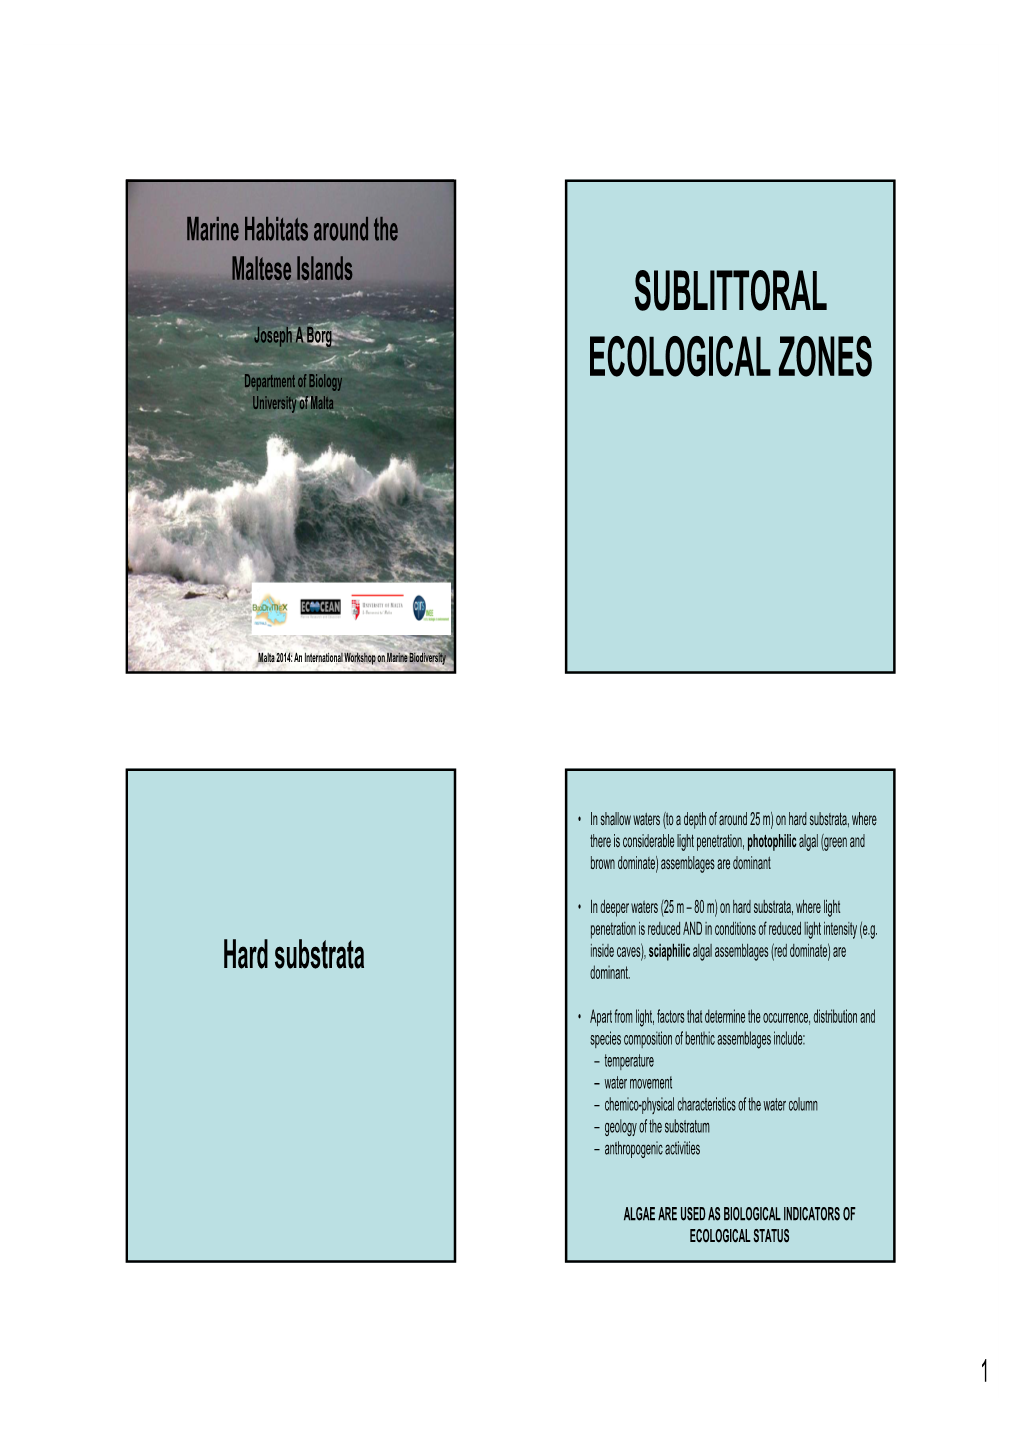 Sublittoral Ecological Zones